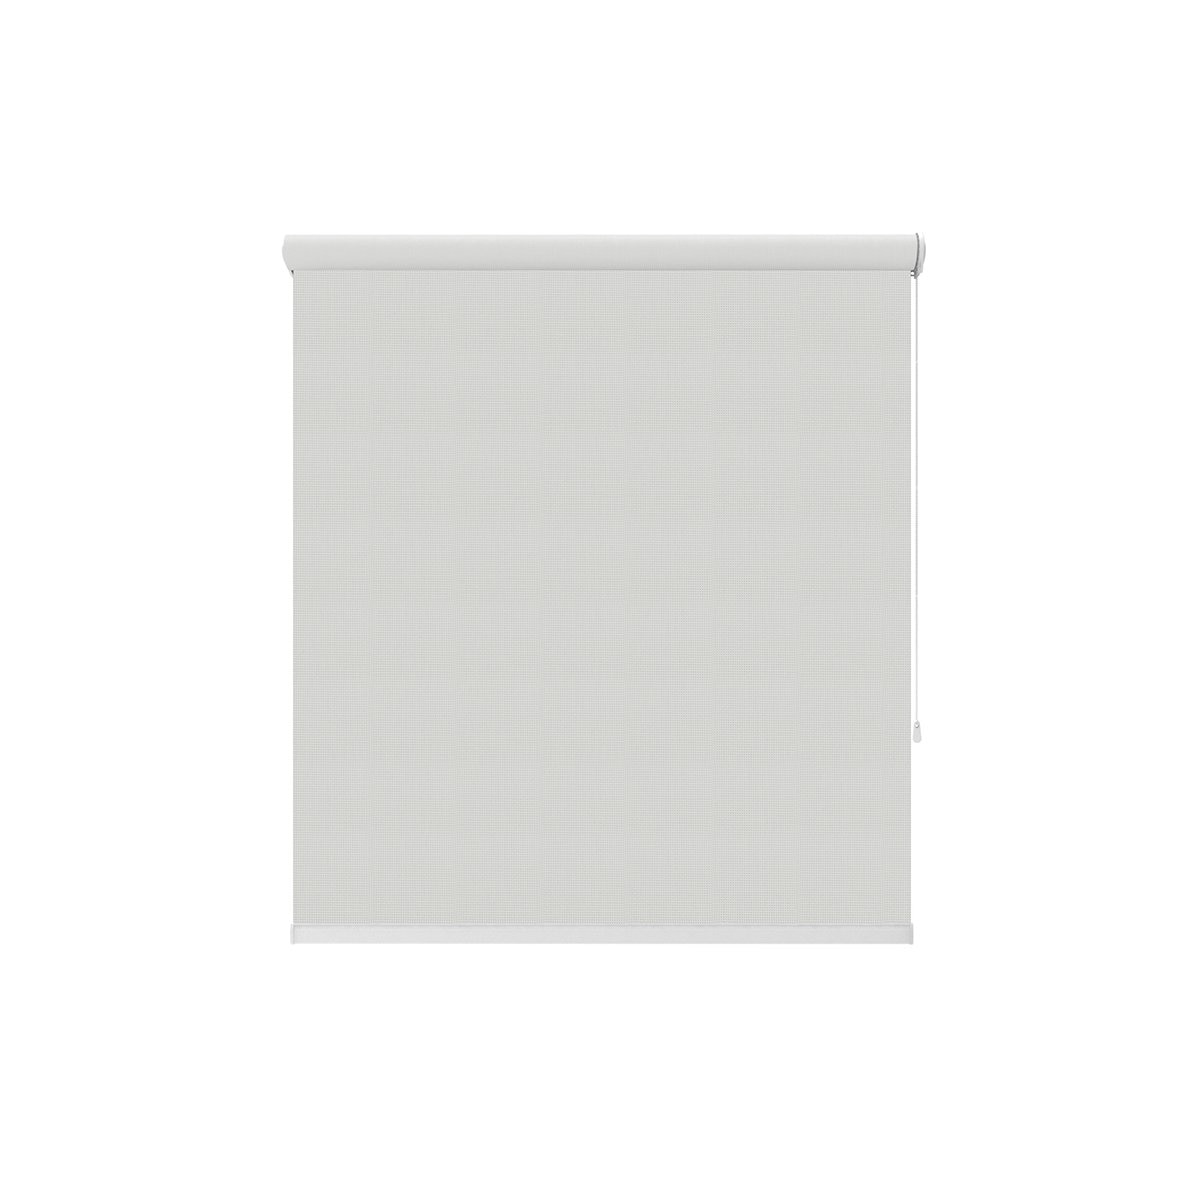 Persiana Enrollable Translucida Screen Phifer 4500 New 1.20 X 1.90 Blanco Classic